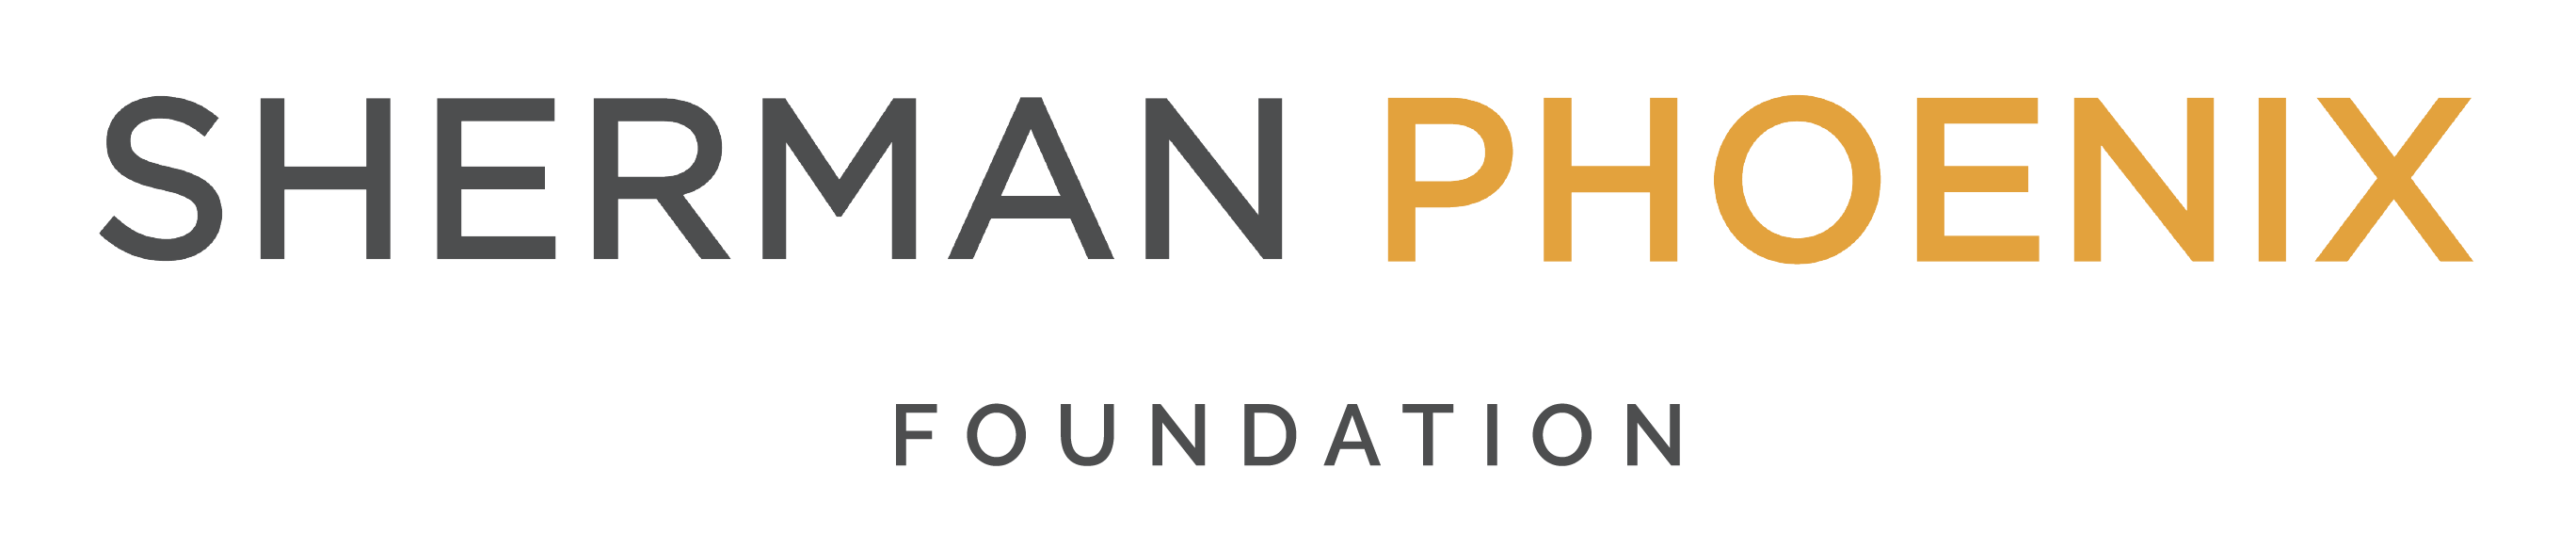 Sherman Phoenix Foundation, Inc. logo